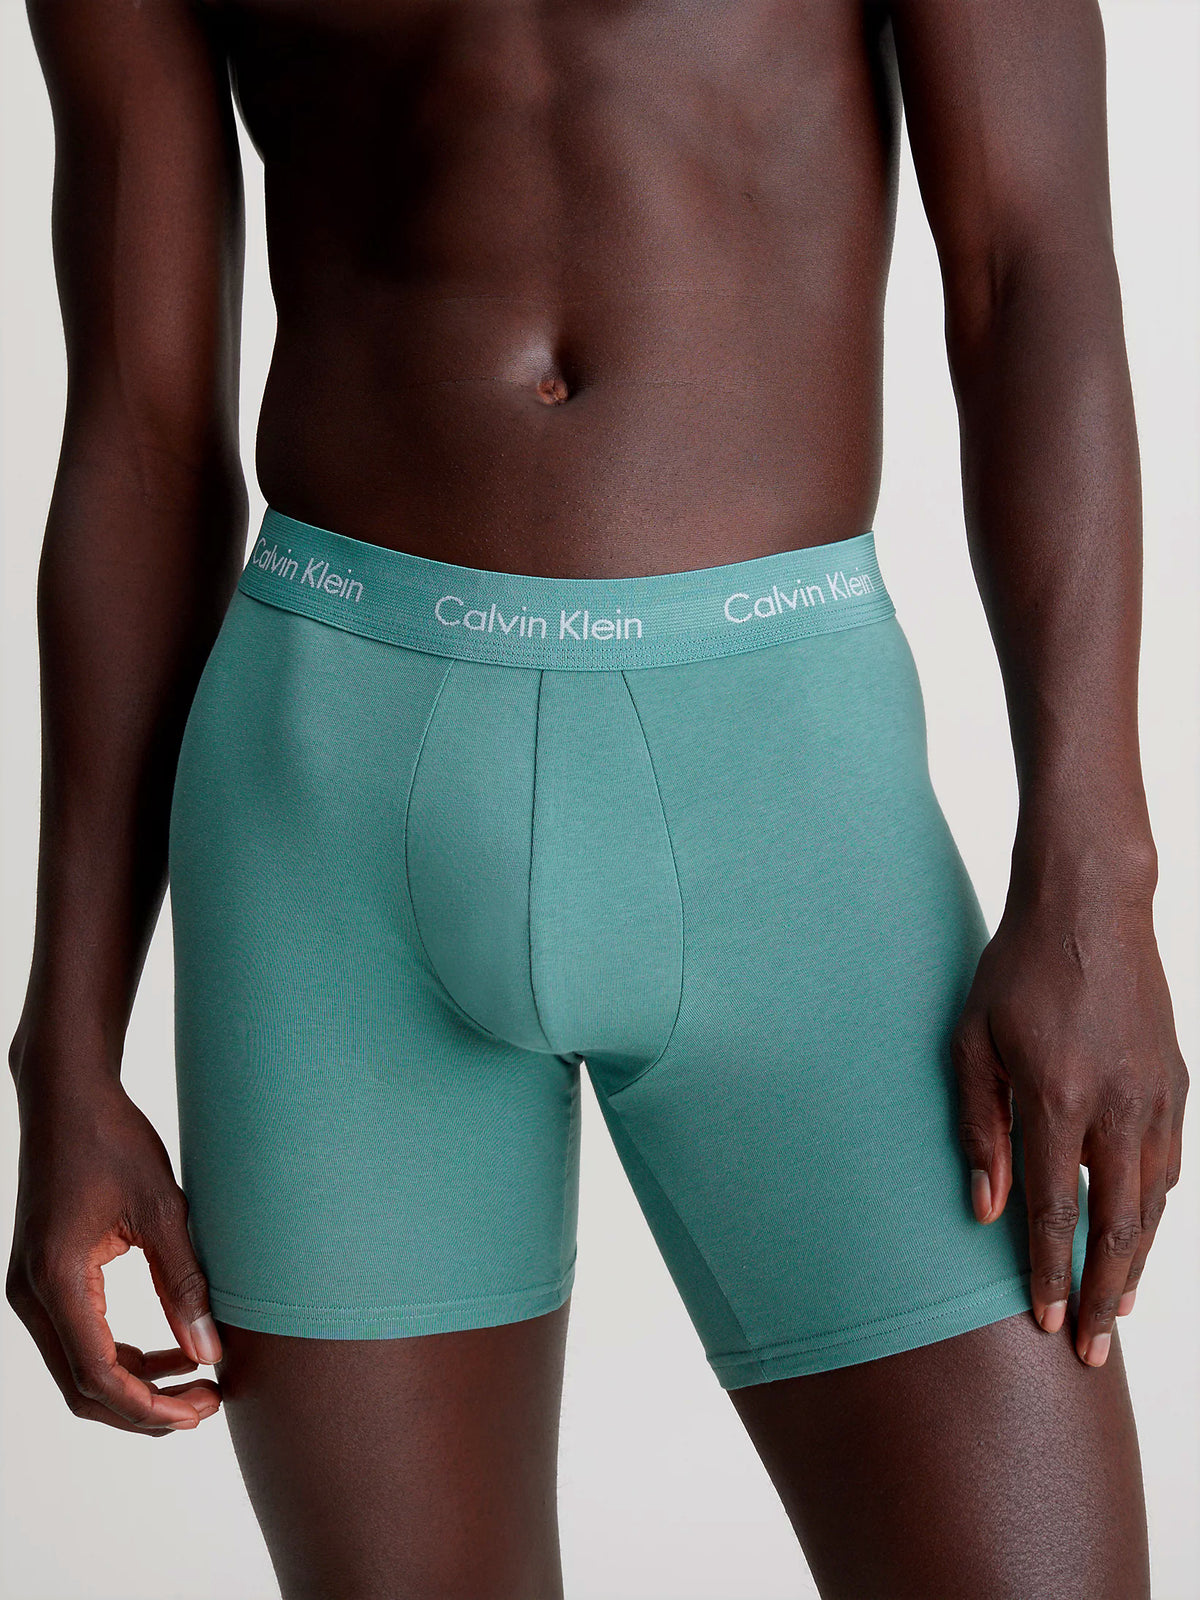 Calvin Klein Mens Boxer Briefs - Classic Fit (3-Pack), 02, Nb1770A, Vivid Blue/Arona/Sagebush Green